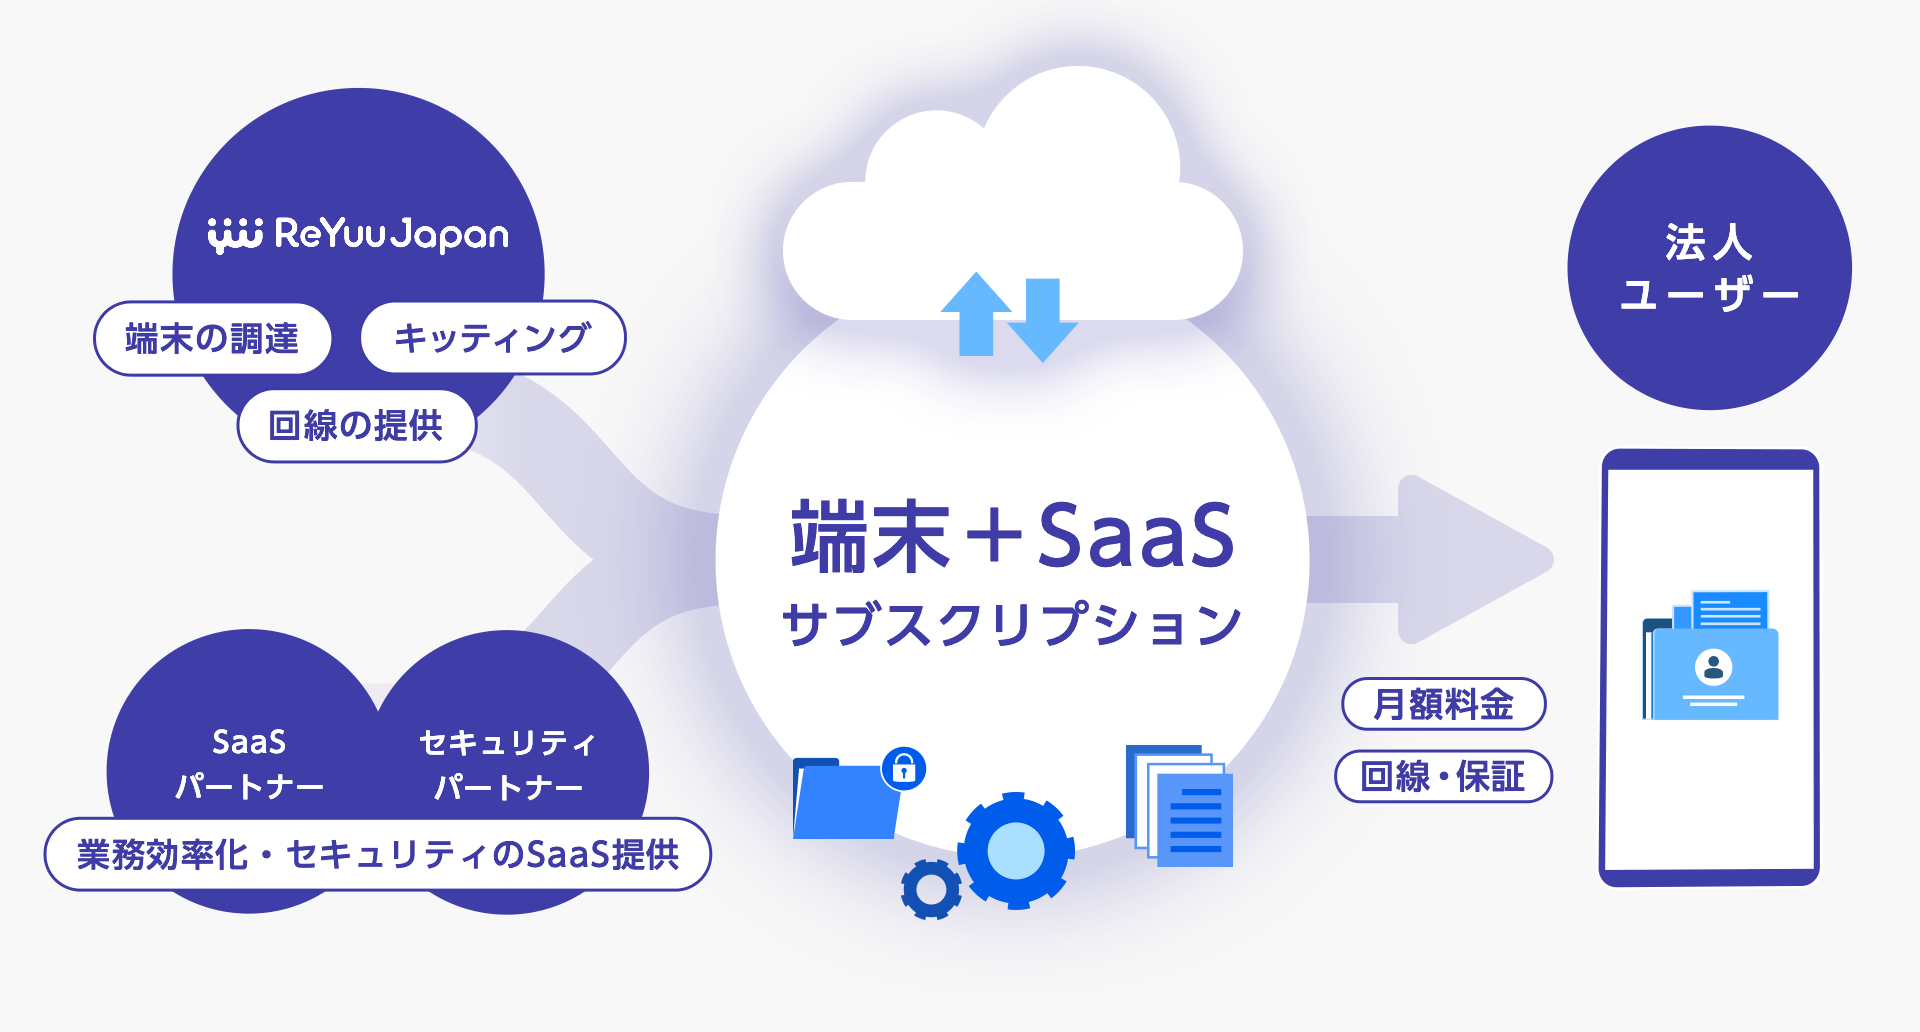 ReYuu Japanが端末の調達、キッティングサービス、回線の提供。SaaSパートナー、セキュリティパートナー業務効率化、セキュリティのSaaS提供。端末＋SaaSサブスクリプション。法人ユーザー月額料金、回線・保証。